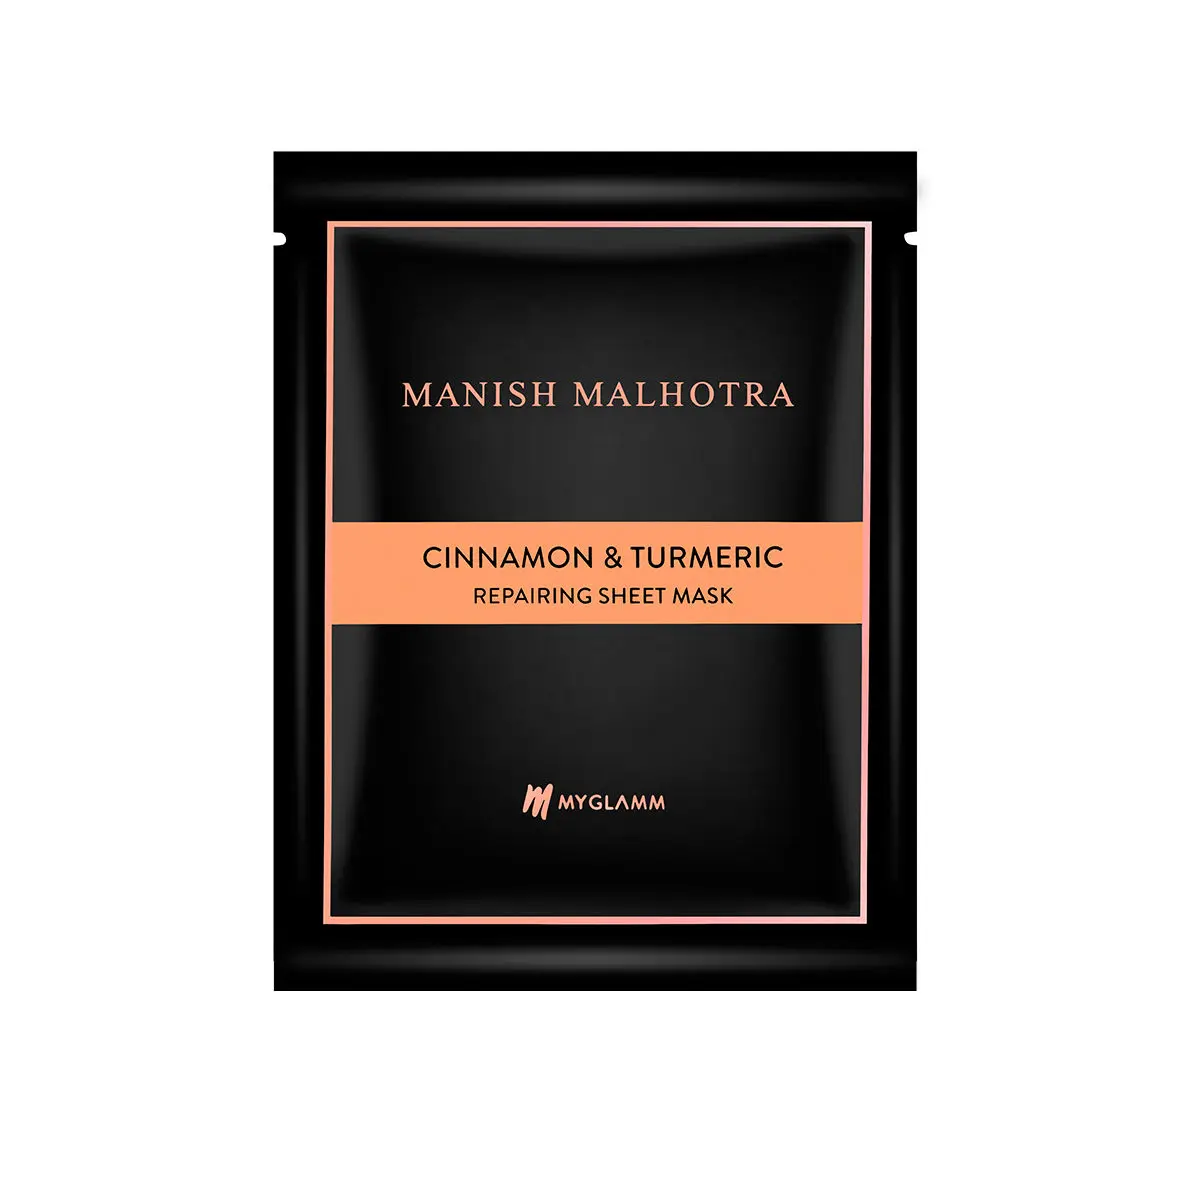 Manish Malhotra Beauty By MyGlamm Cinnamon & Turmeric Repairing Sheet Mask-25 ml